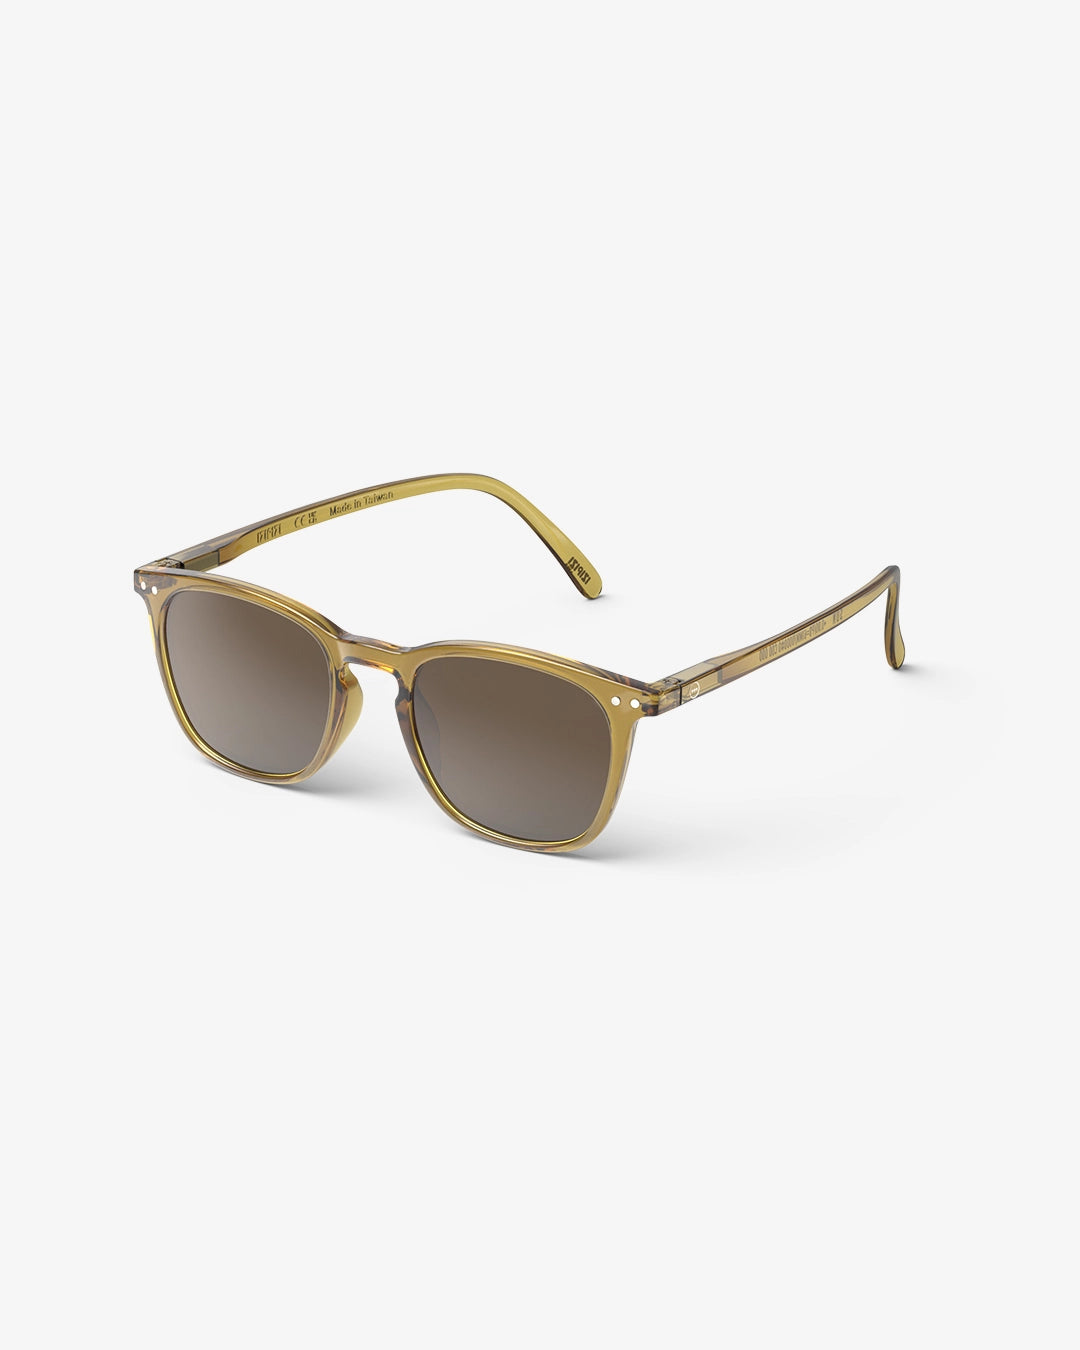 Sunglasses  - #E Golden Green